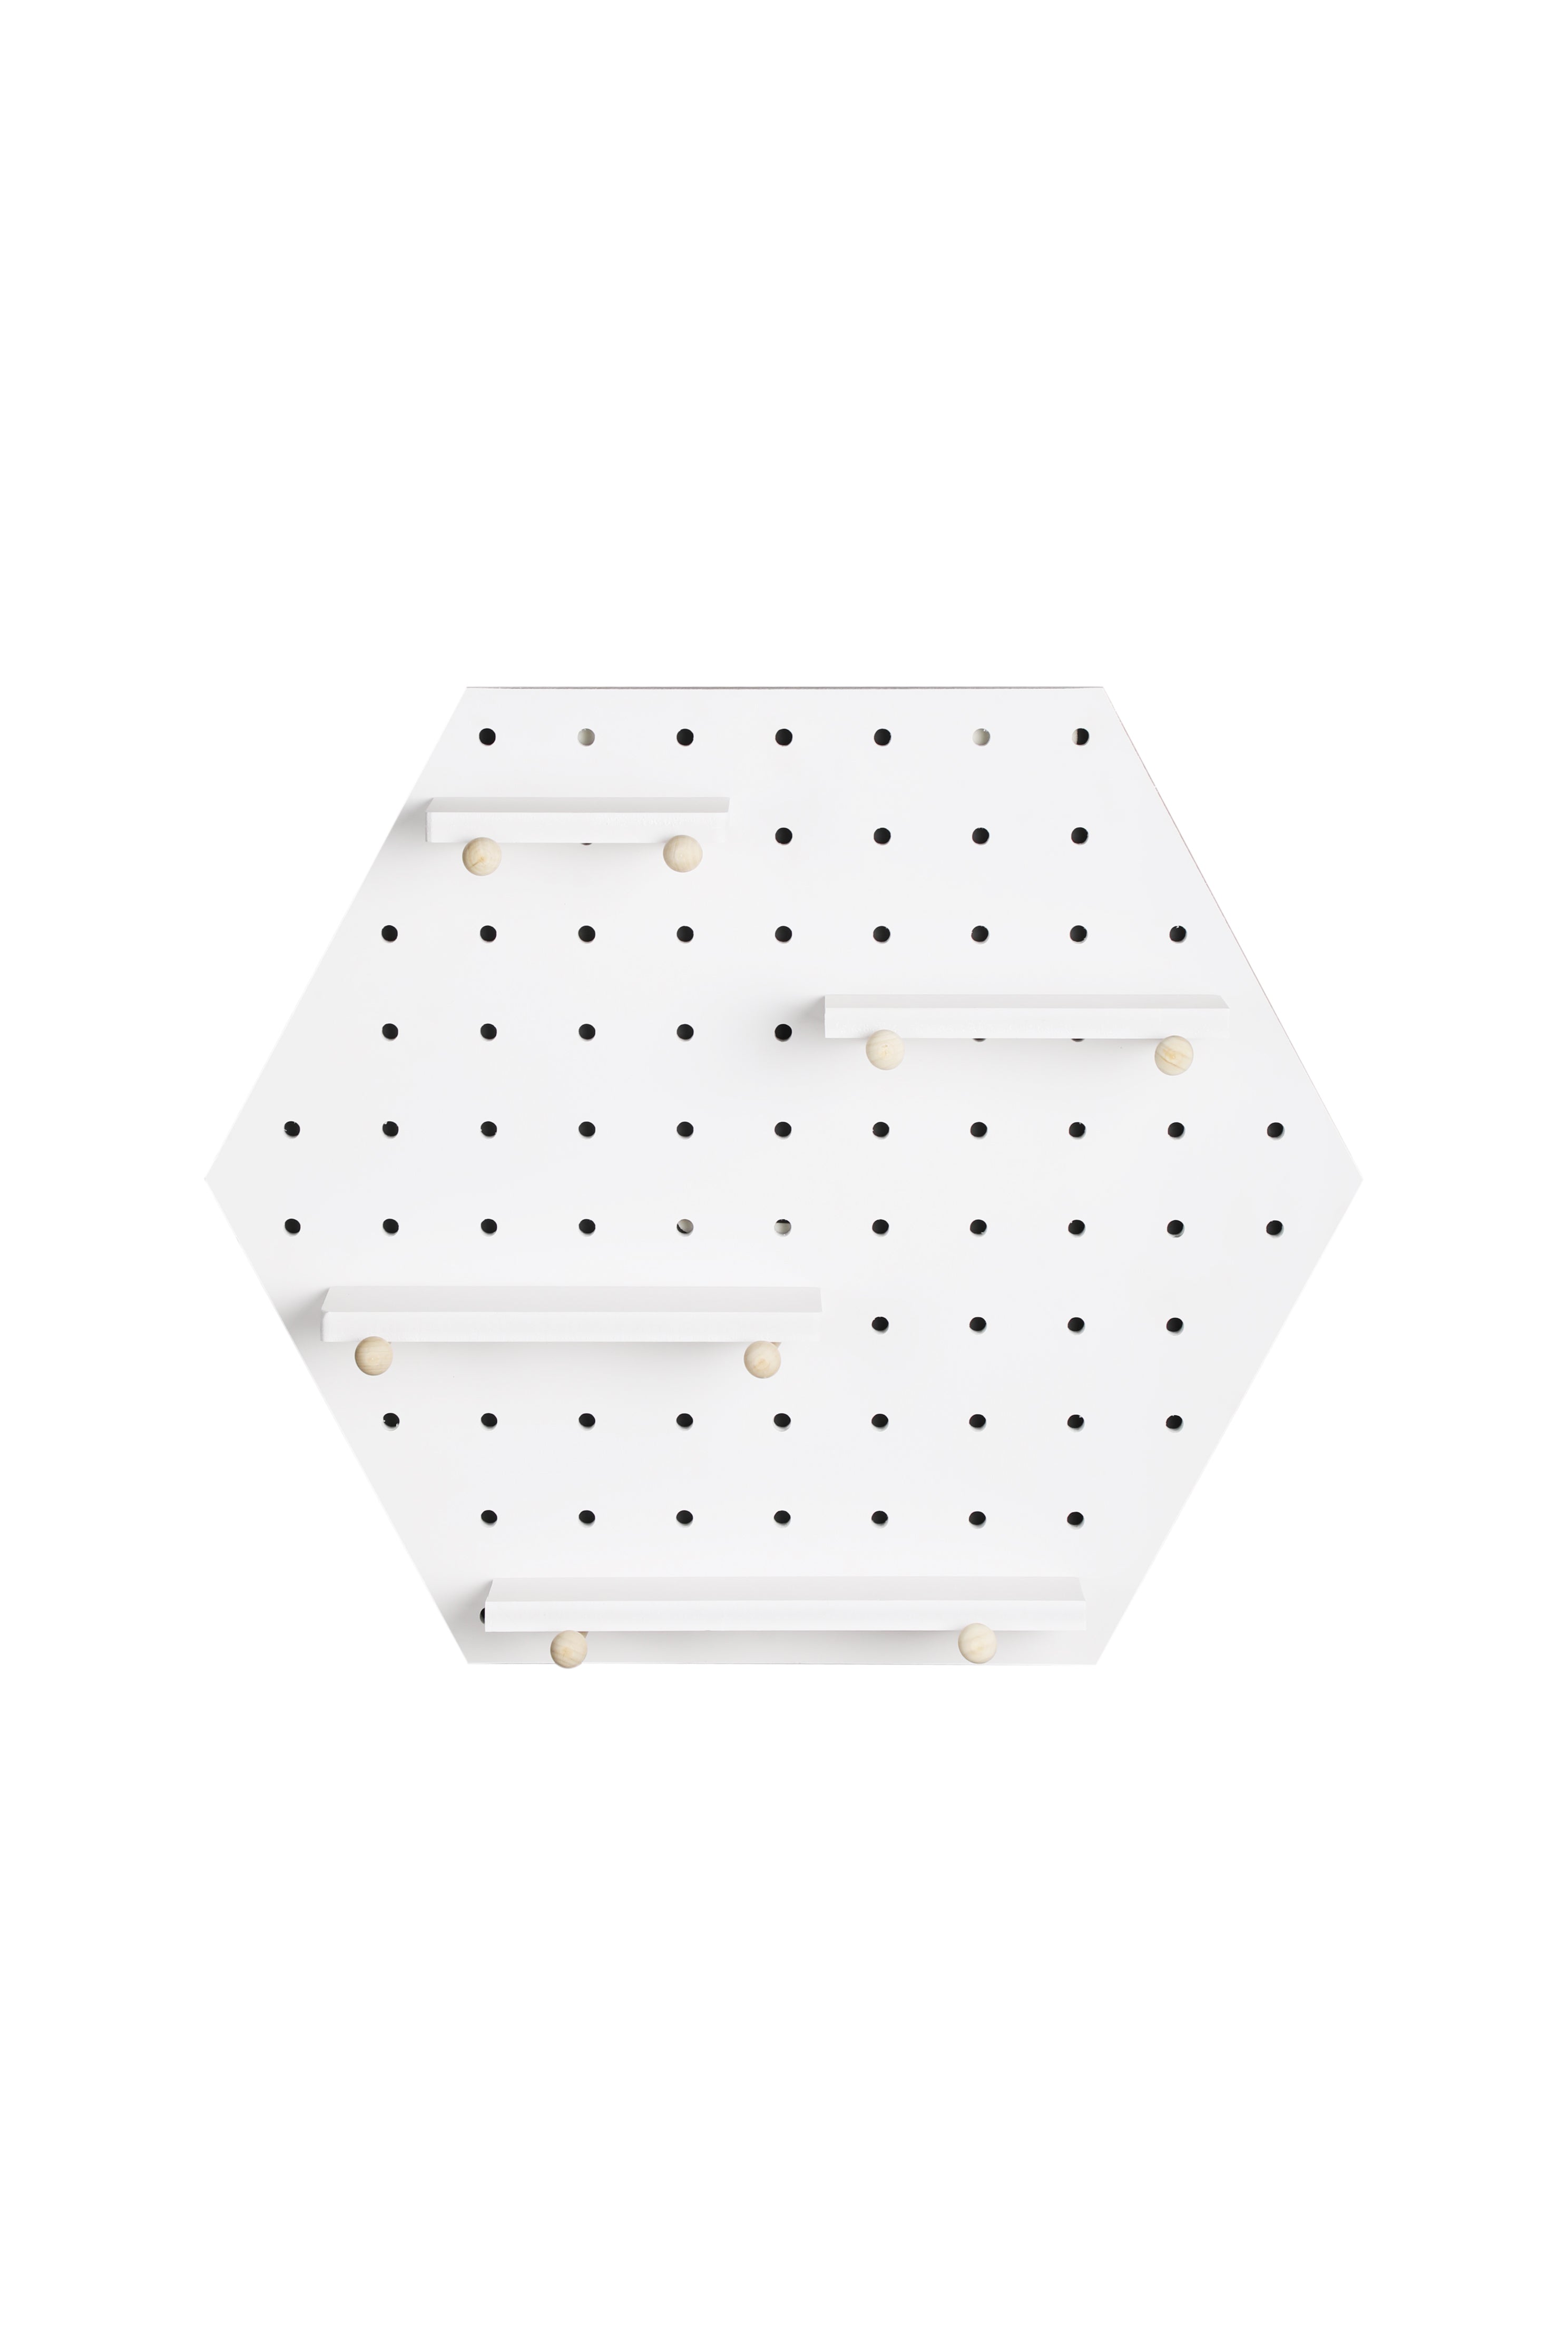 Urbancart Multipurpose Hexagonal Shelf/Decorative Storage Rack Wall Shelf  (Number of Shelves - 4, White)